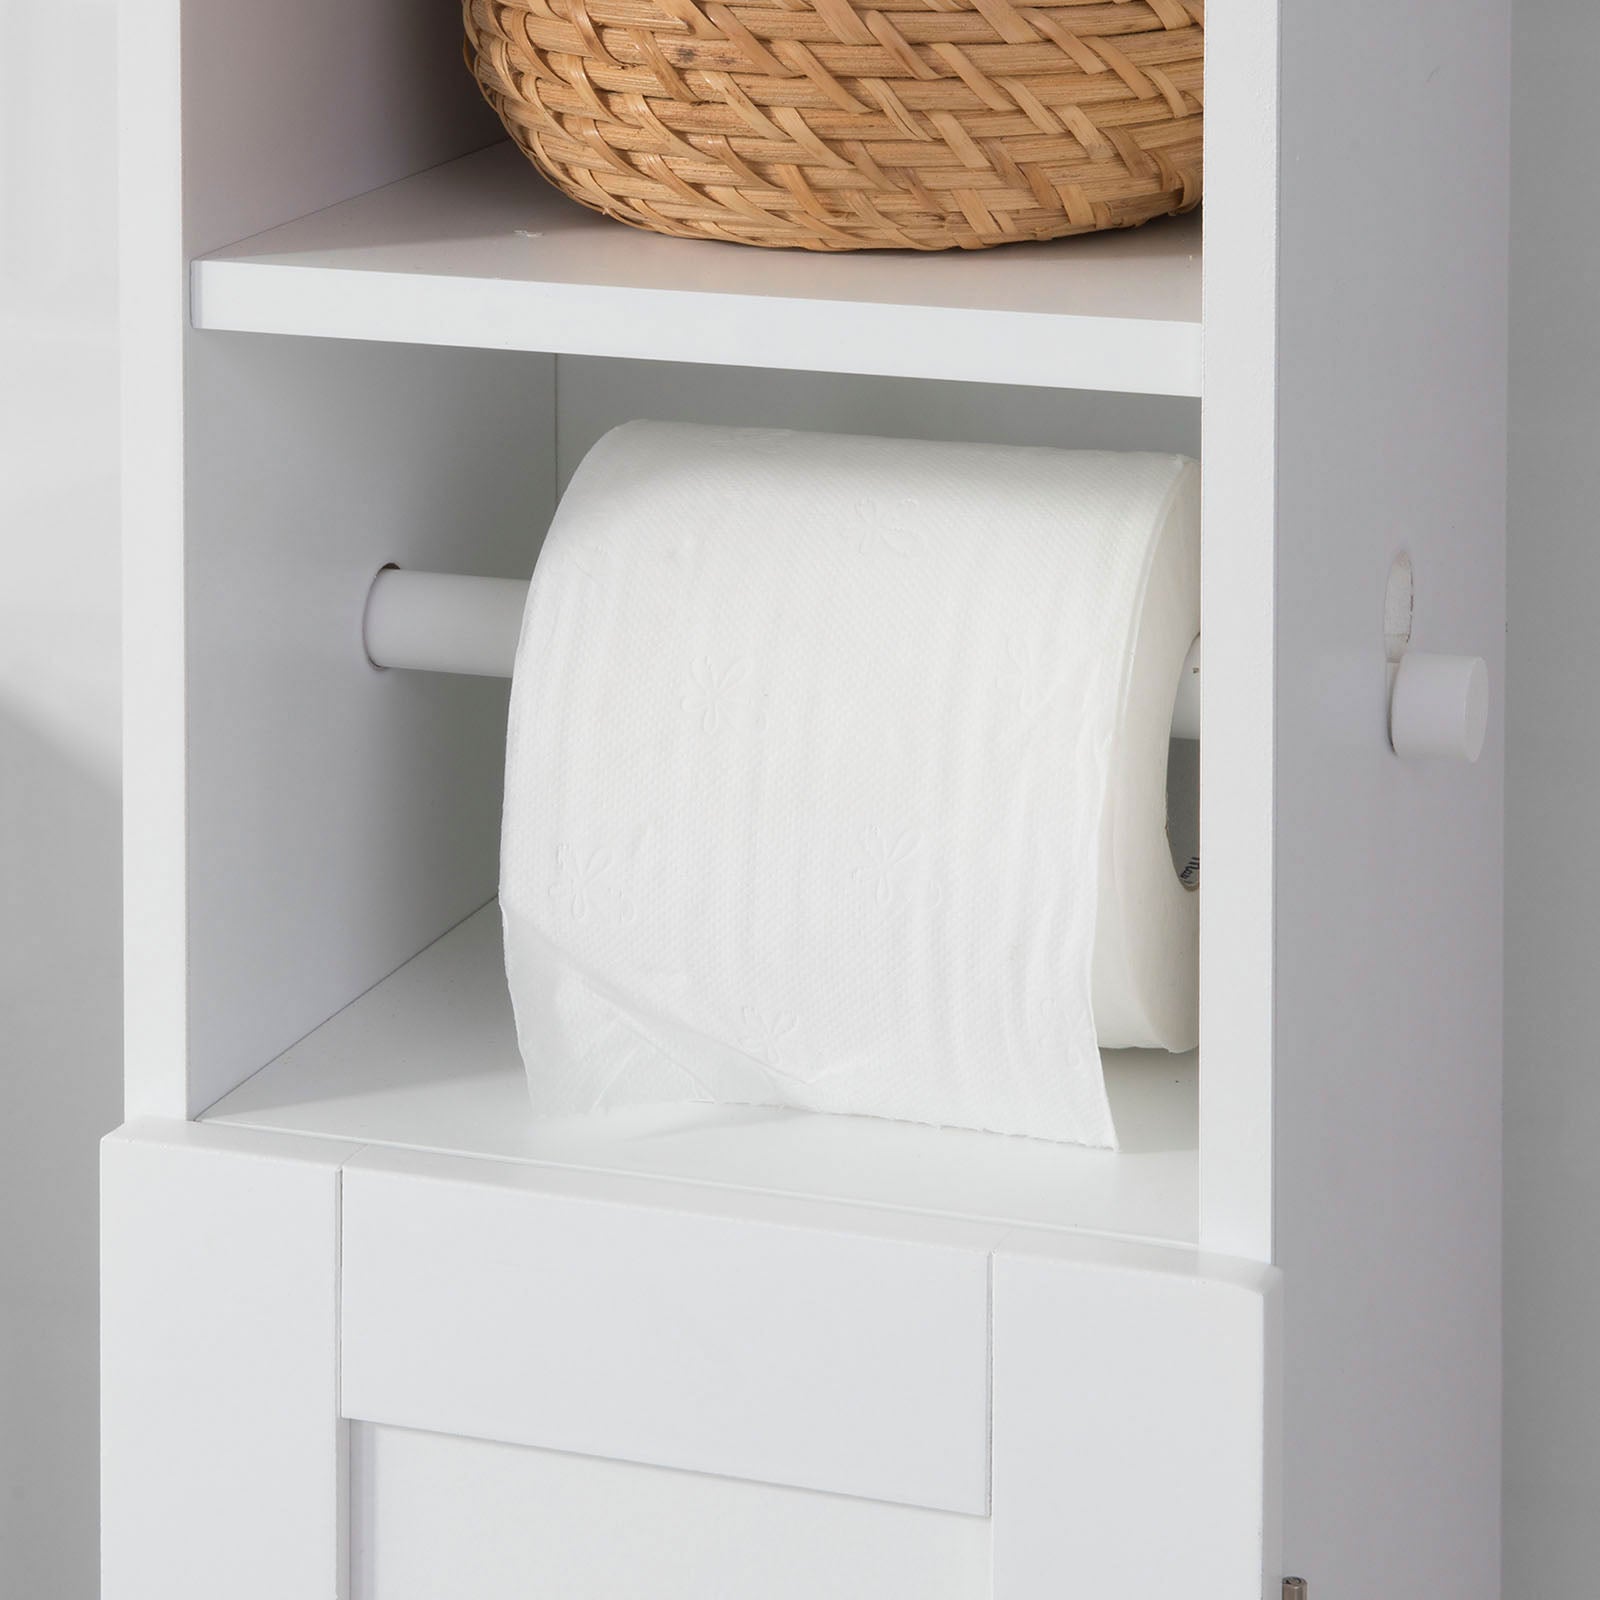 SoBuy Wooden Bathroom Toilet Paper Storage Cabinet FRG177-W